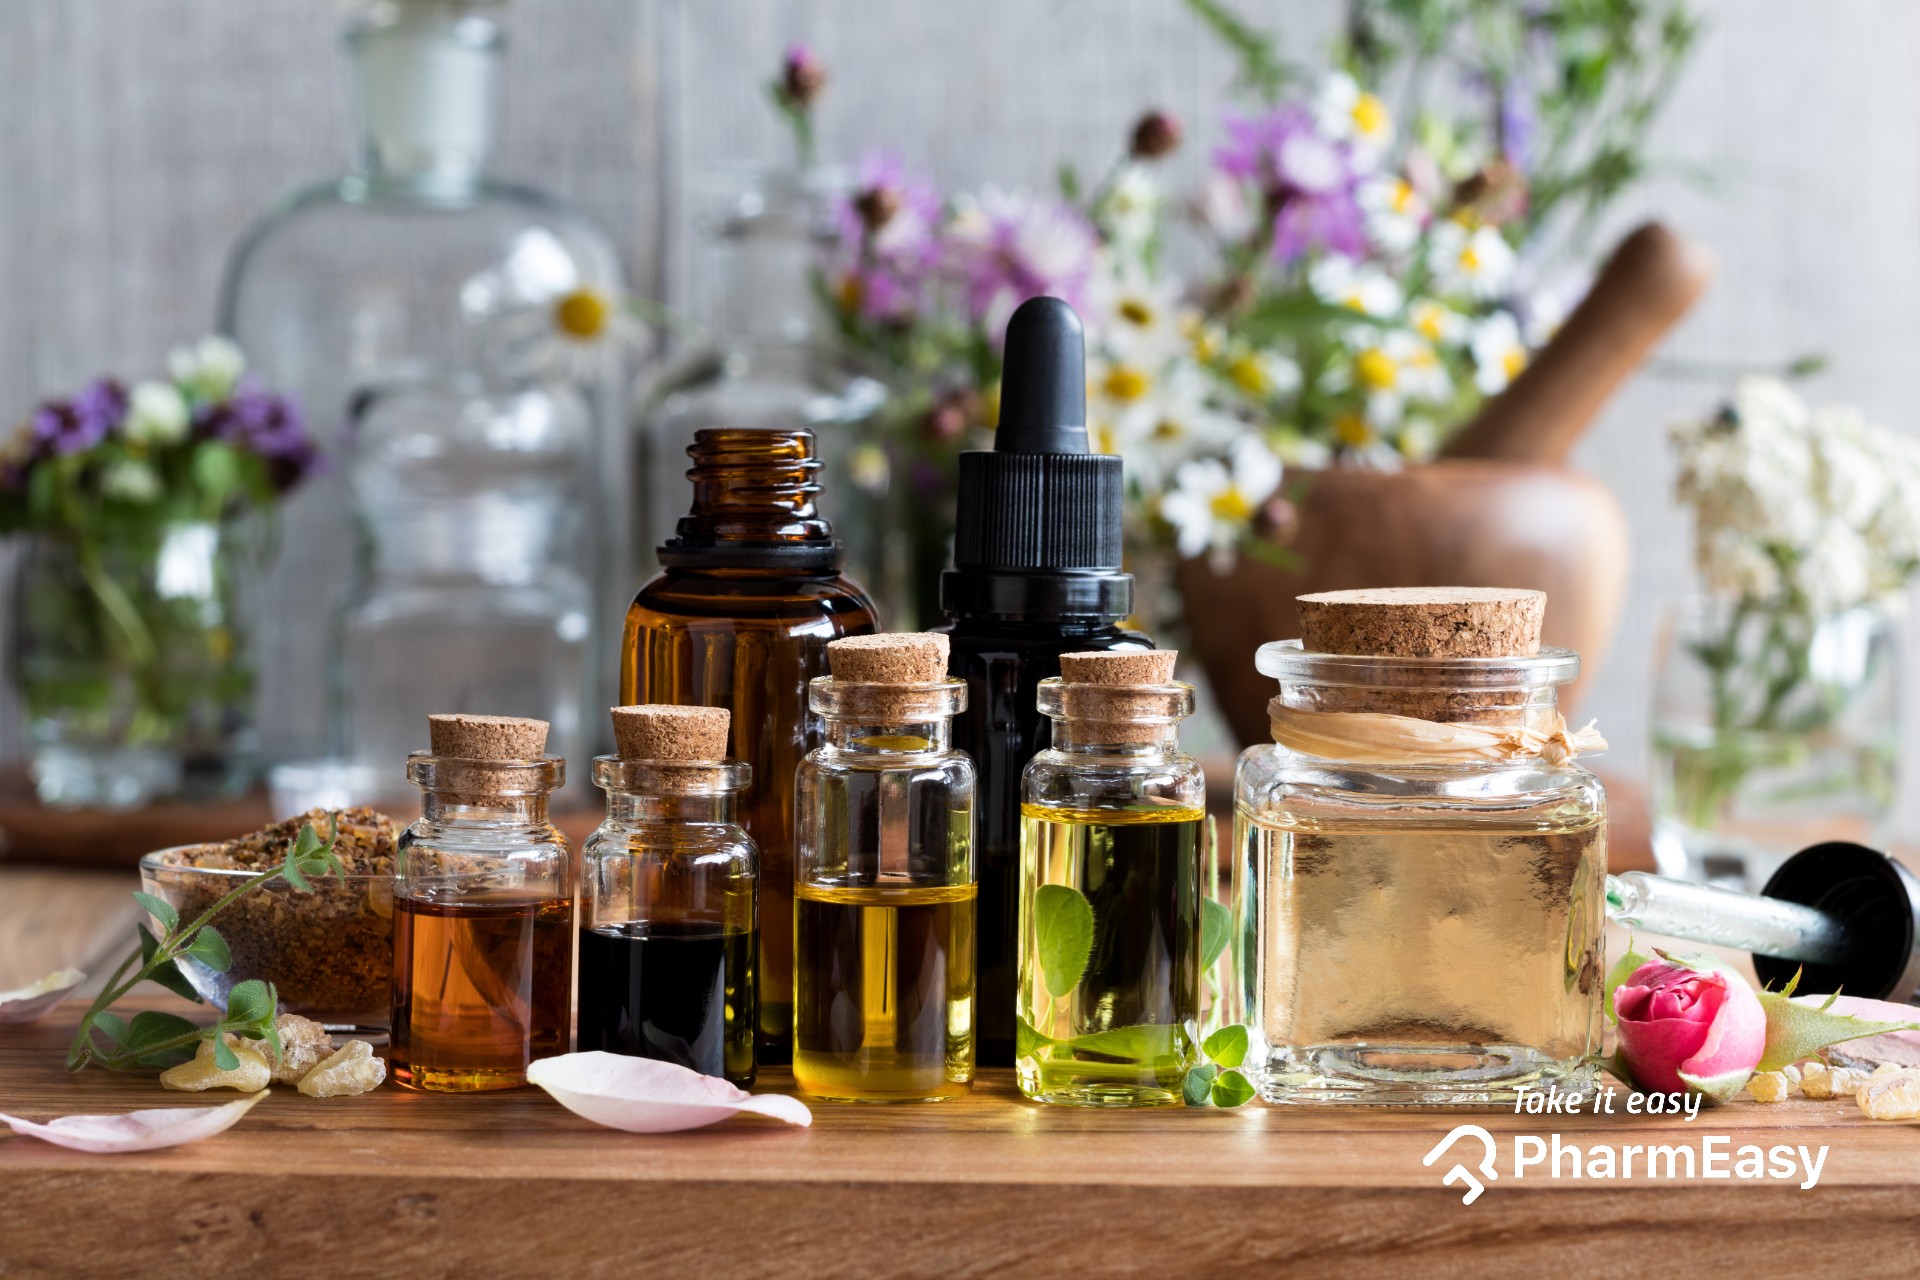 health benefits of essential oils